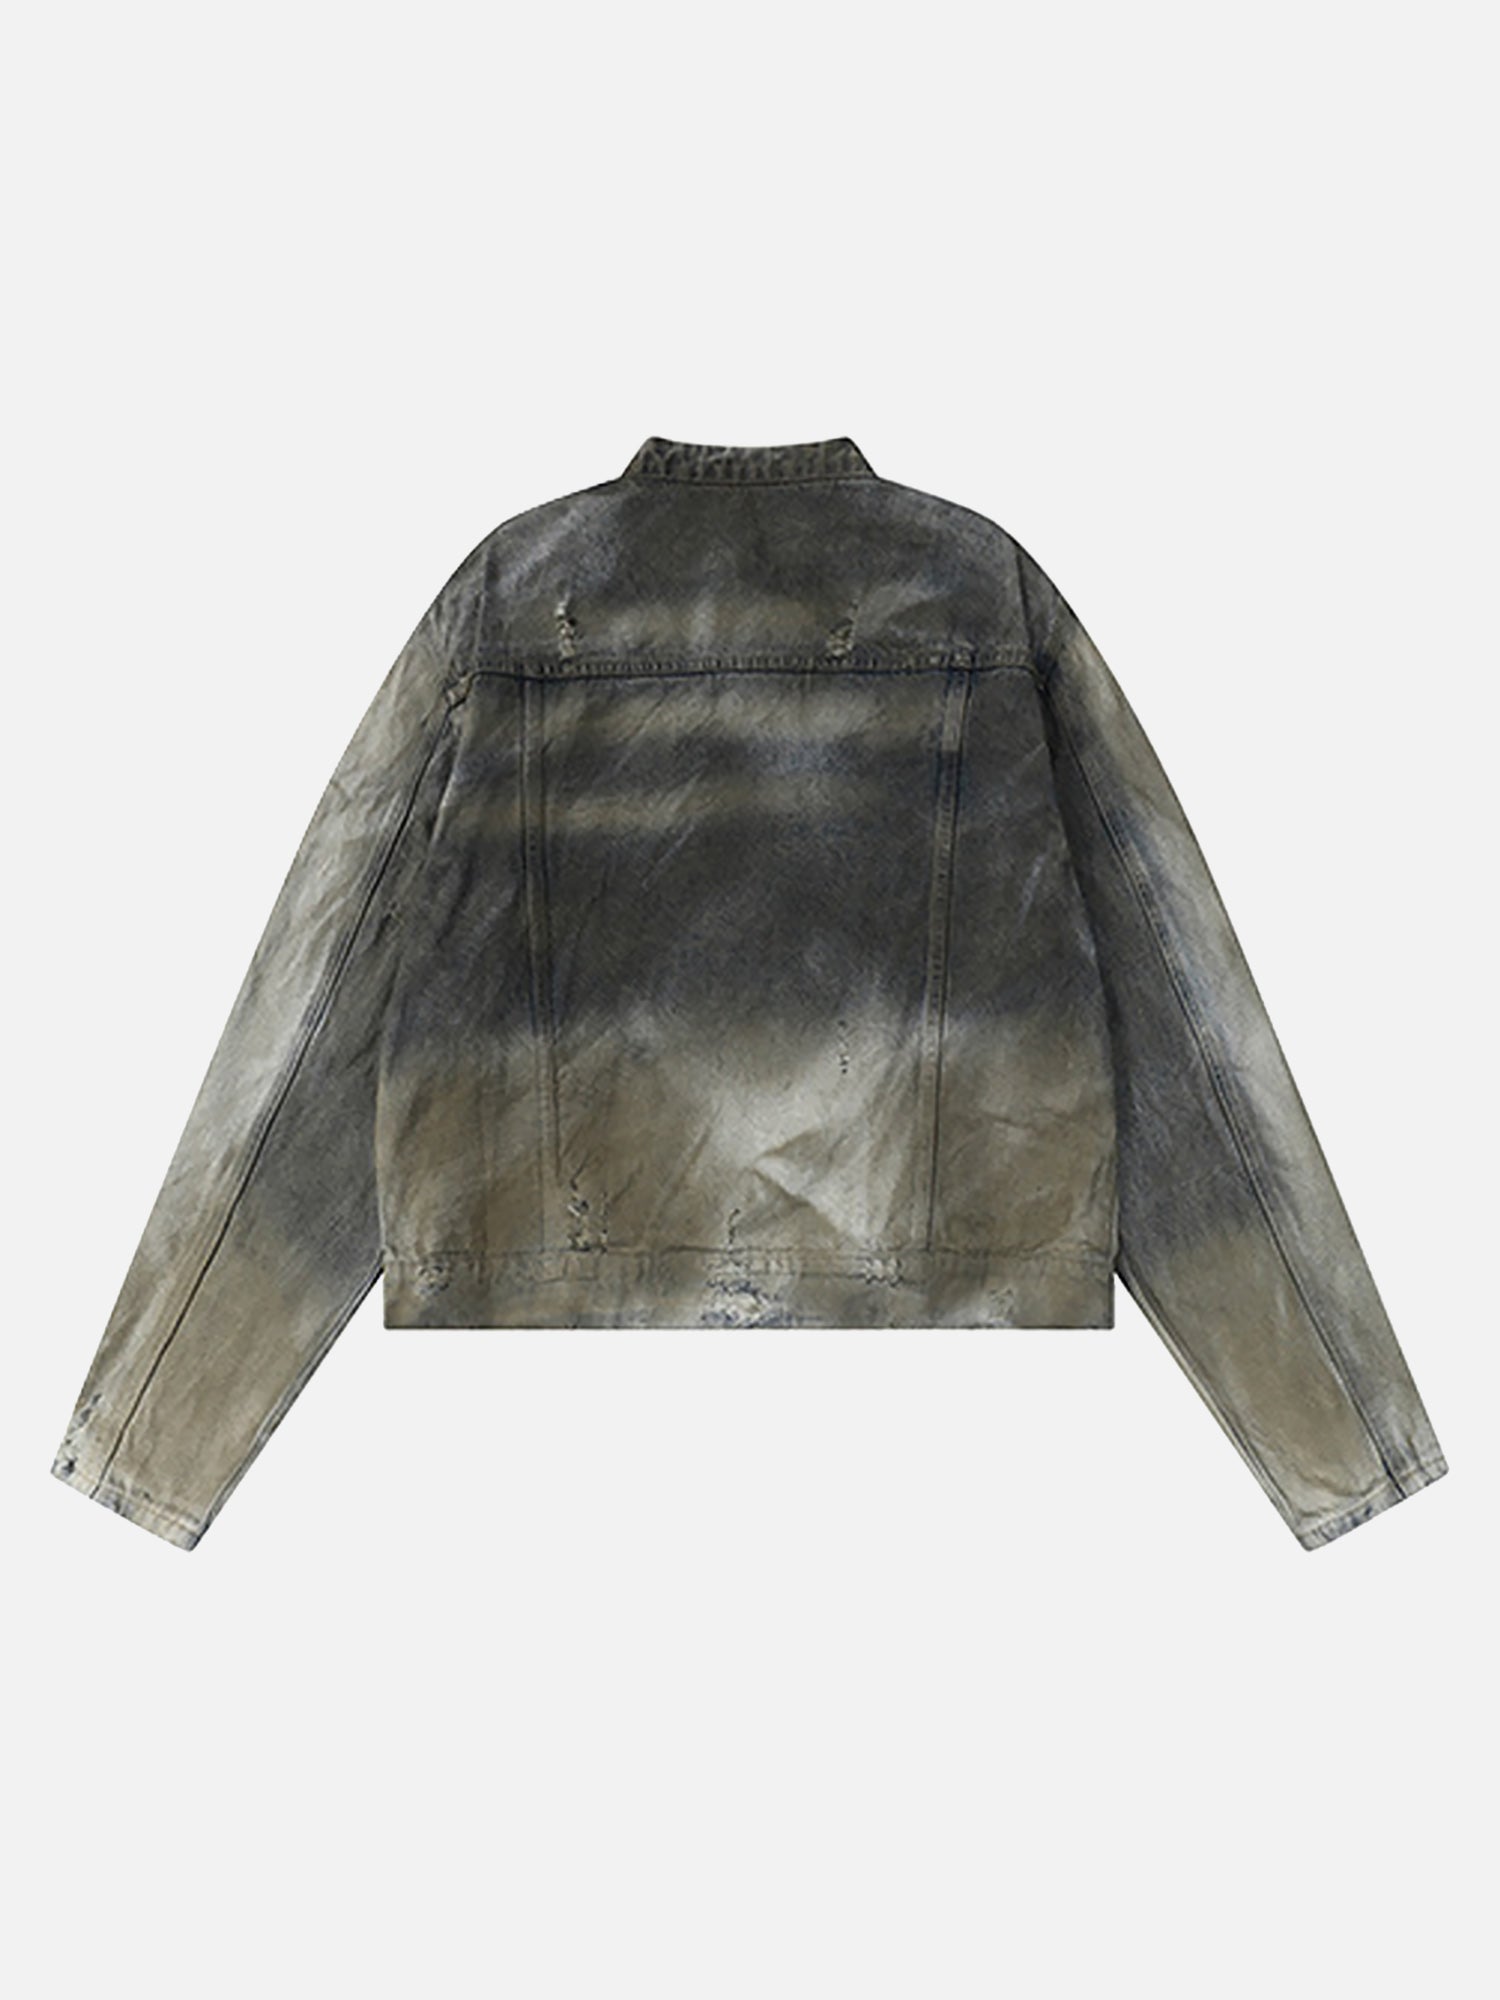 Thesupermade American Street Fashion Heavy Duty Washed Denim Jacket